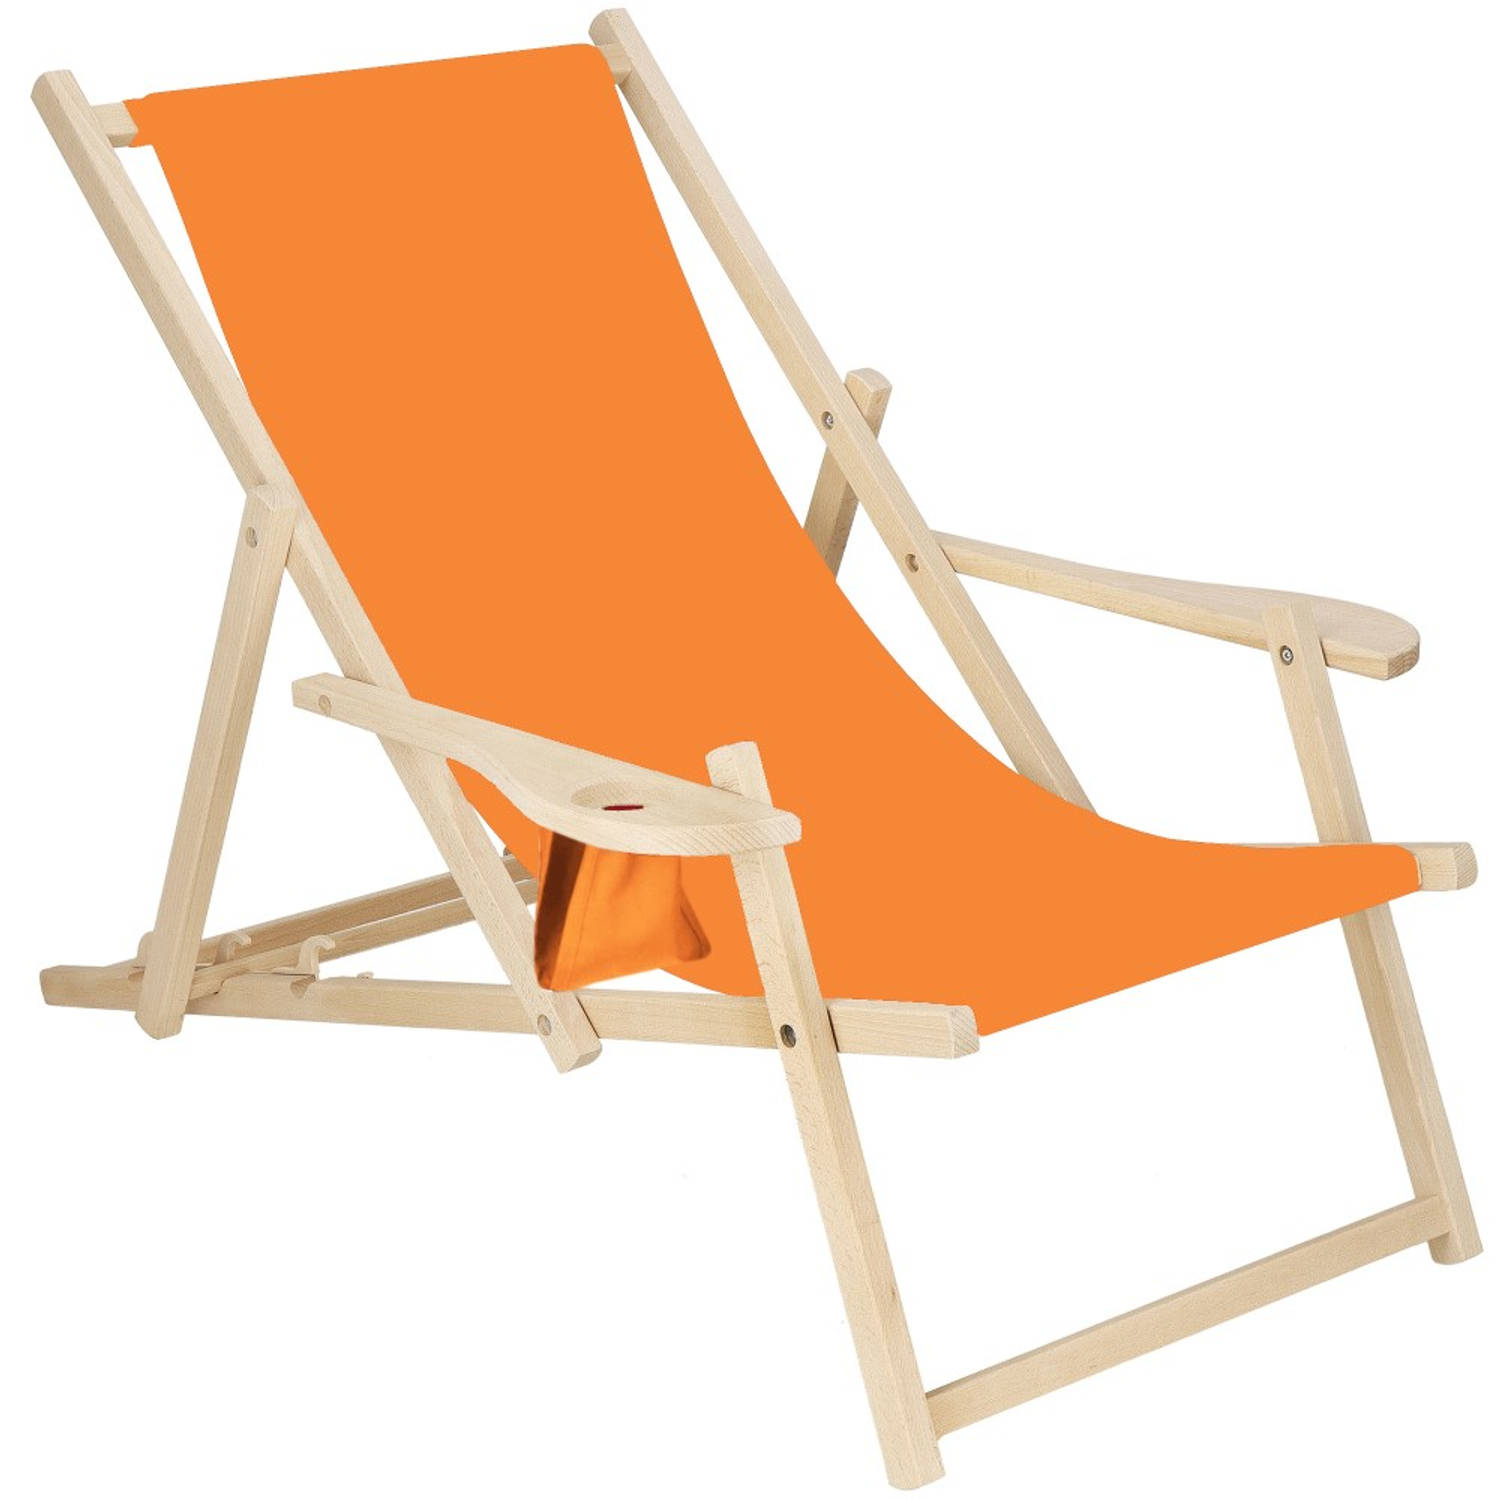 Ligbed Strandstoel Ligstoel Verstelbaar Armleuningen Beukenhout Handgemaakt Oranje